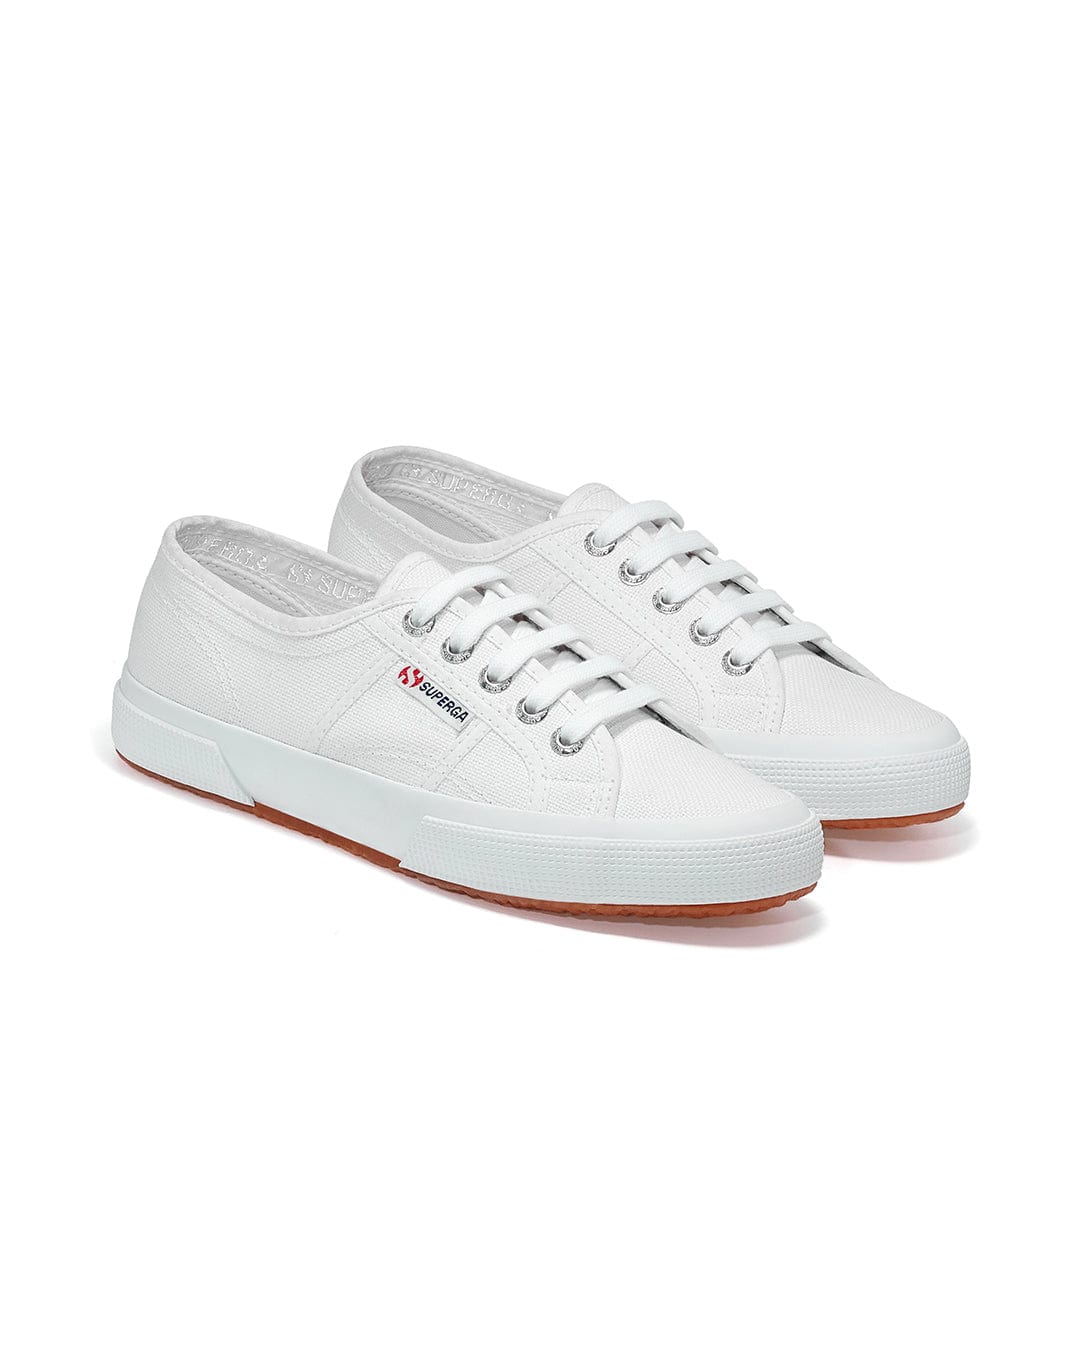 Superga Shoes Superga 2750 Cotu Classic White Sneakers